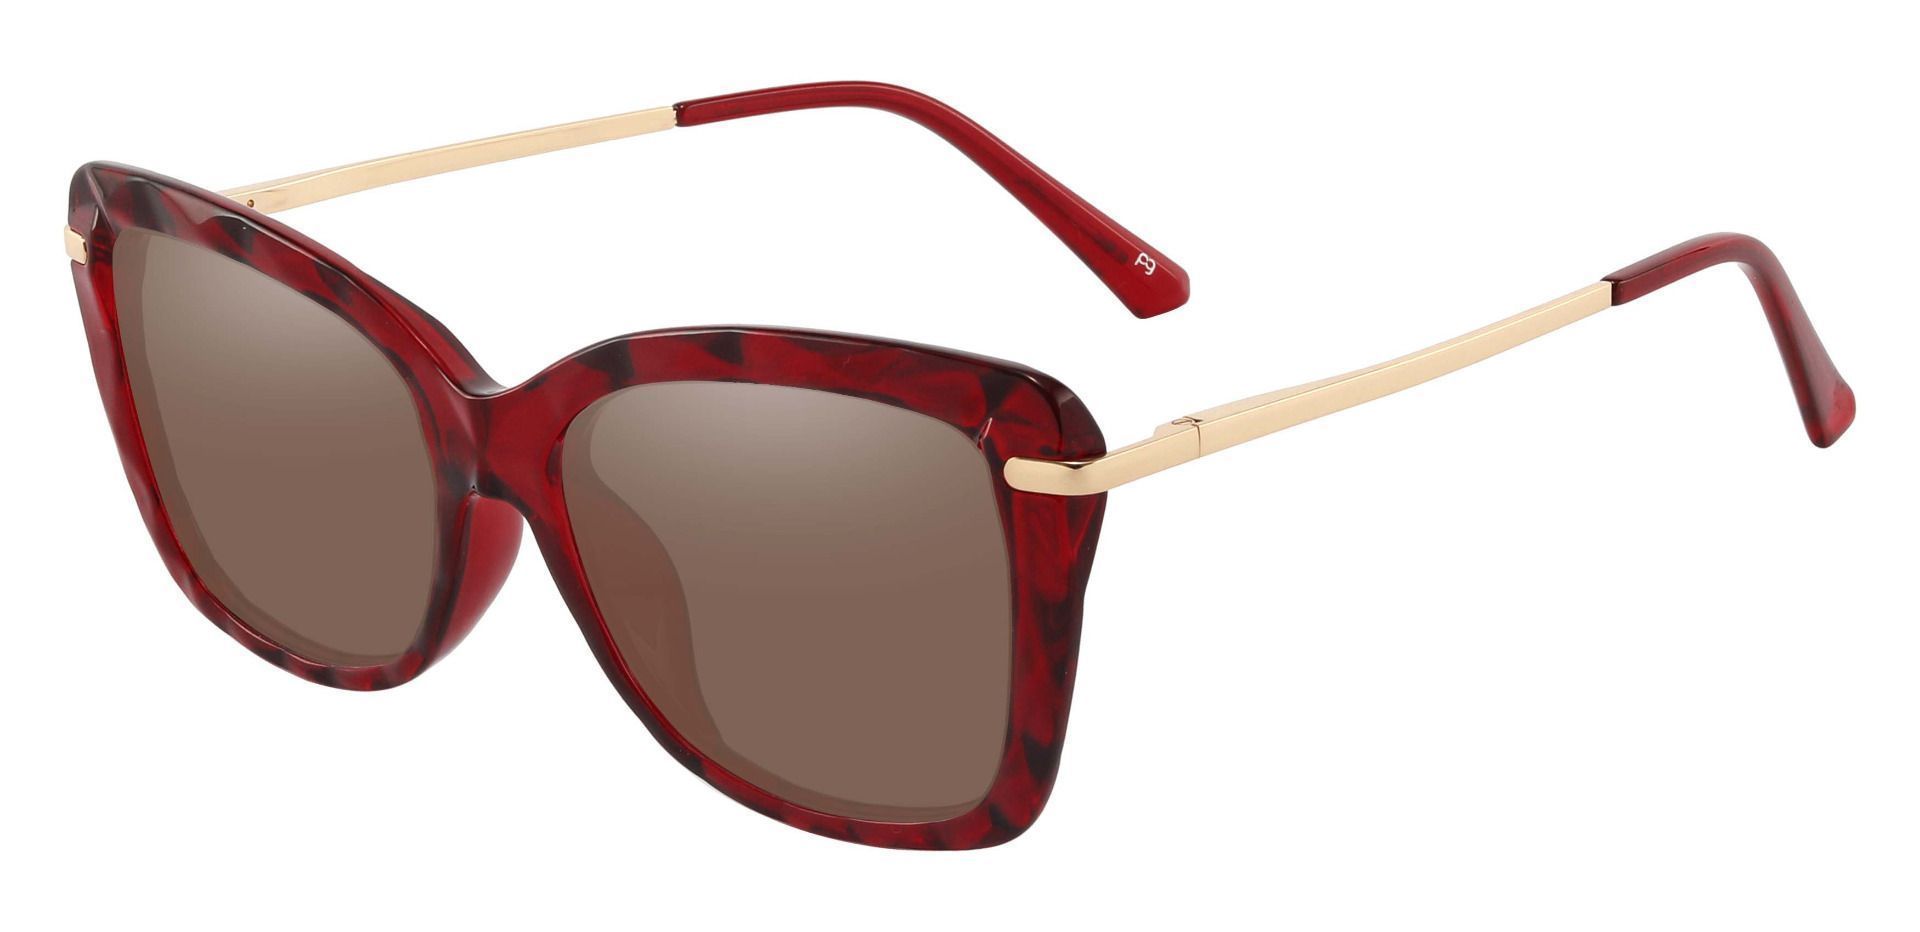 Shoshanna Rectangle Prescription Sunglasses - Red Frame With Brown Lenses